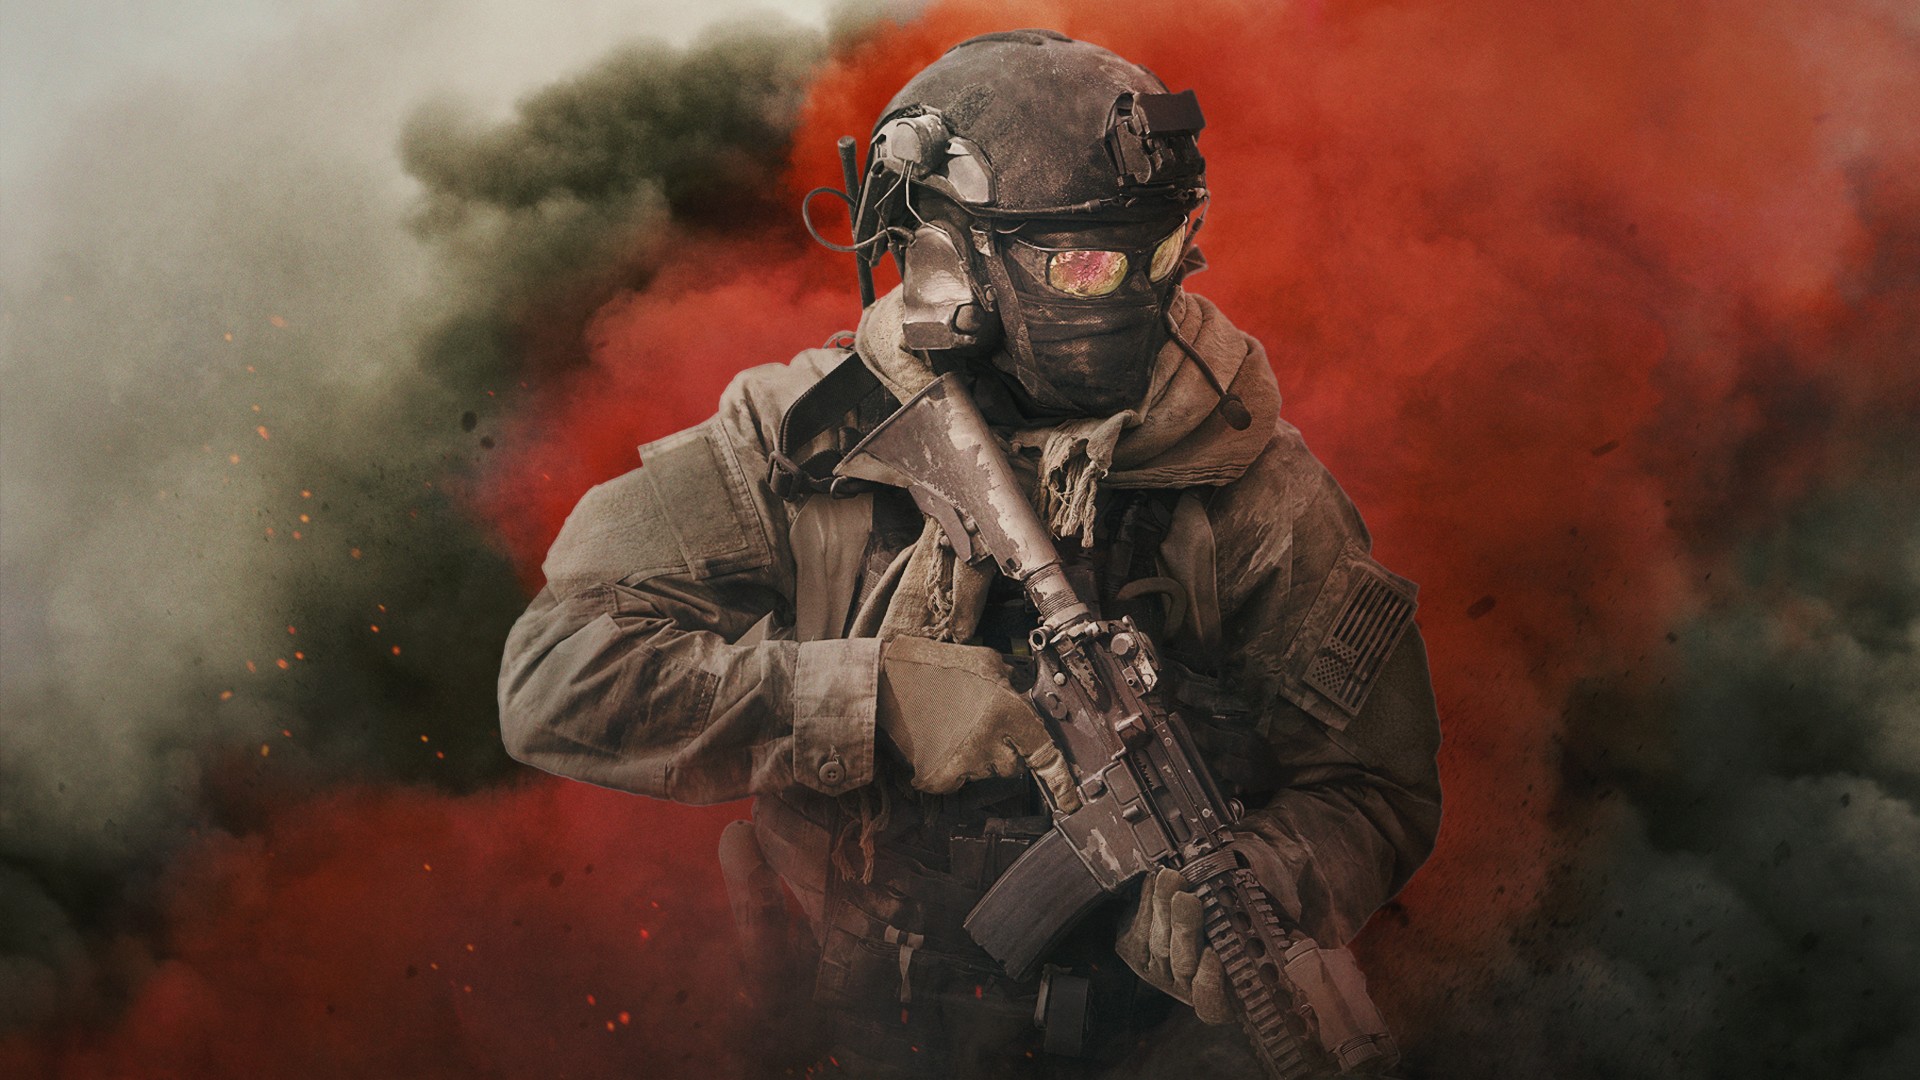 A Hero Returns in Call of Duty Modern Warfare Season Three, Available